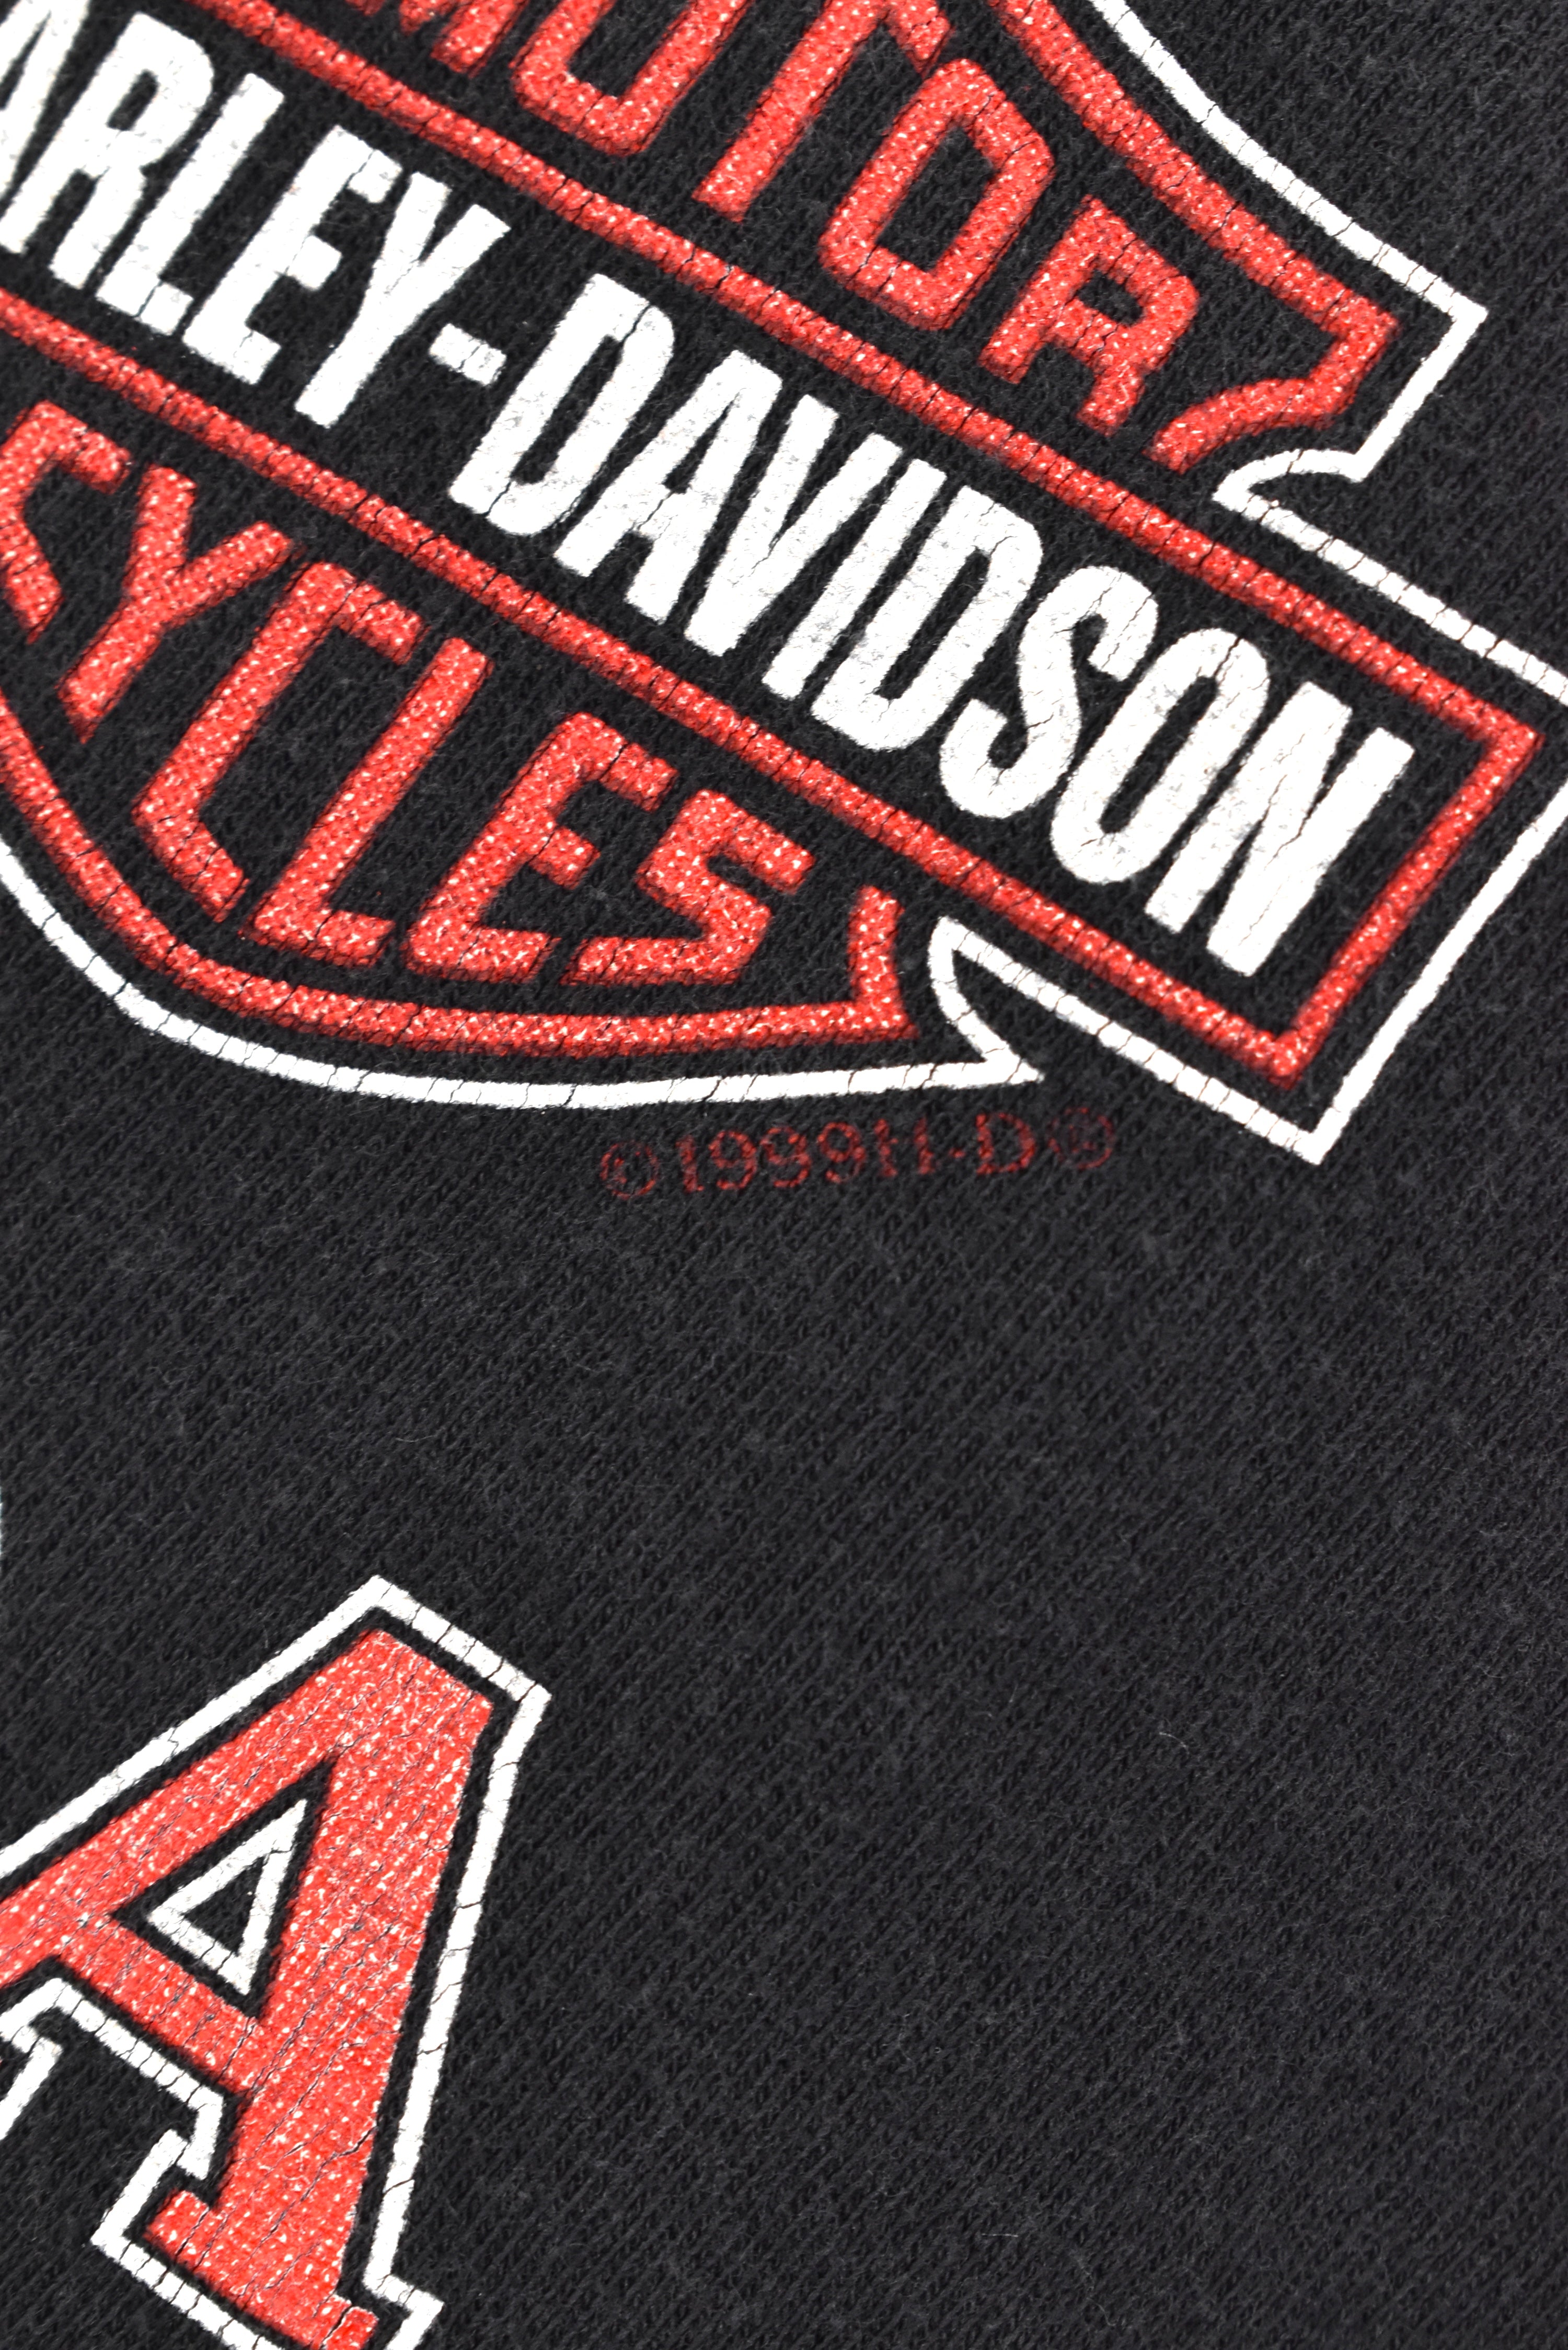 Vintage Harley Davidson shirt, 1999 motorcycle biker graphic tee - XXL, black HARLEY DAVIDSON